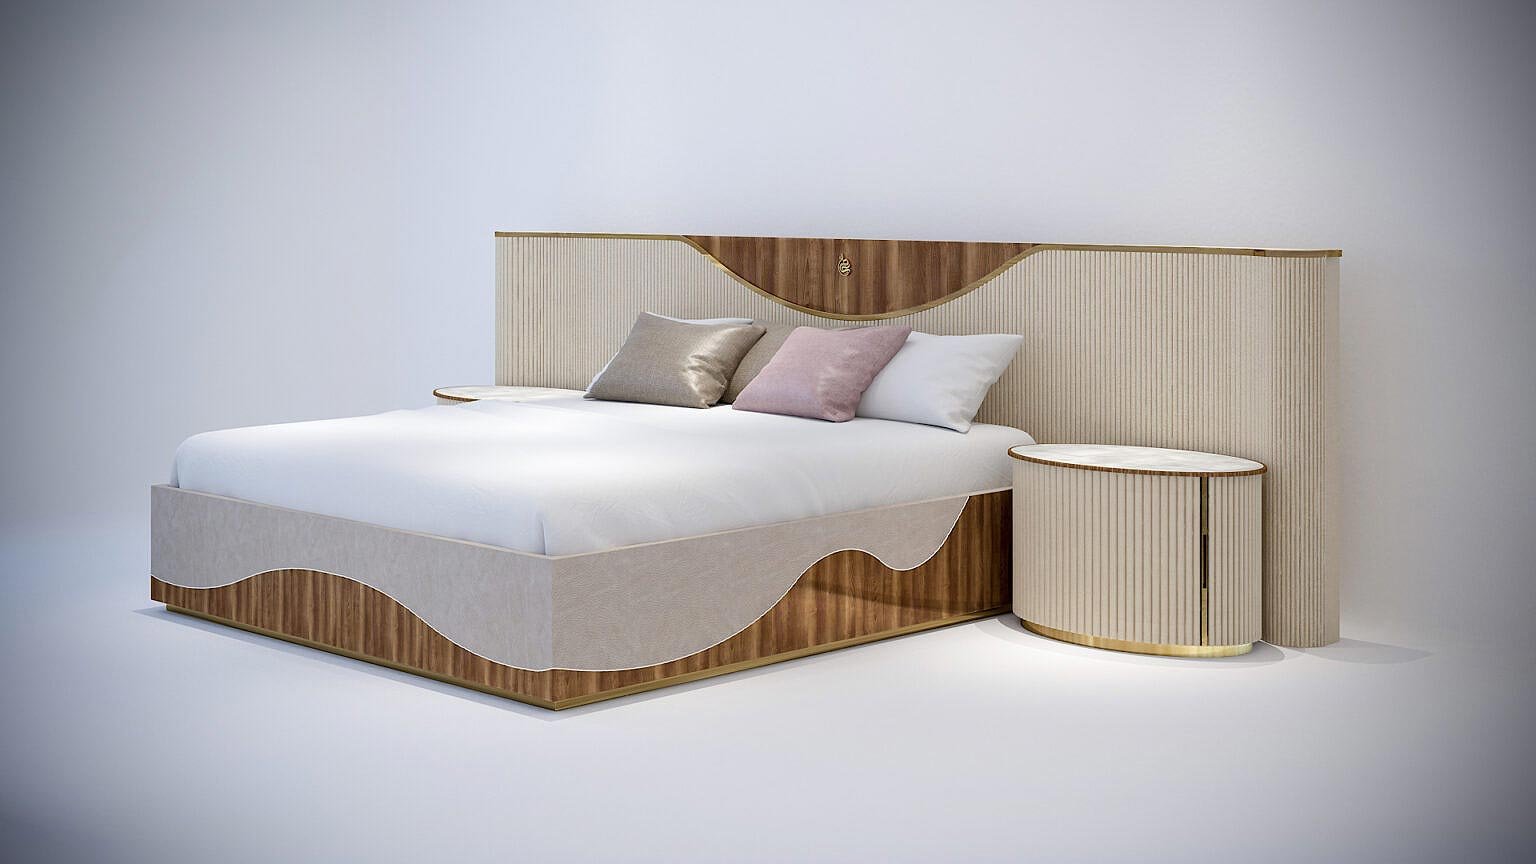 Jelly fish bed _ furniture _ shruti sodhi interior designs.